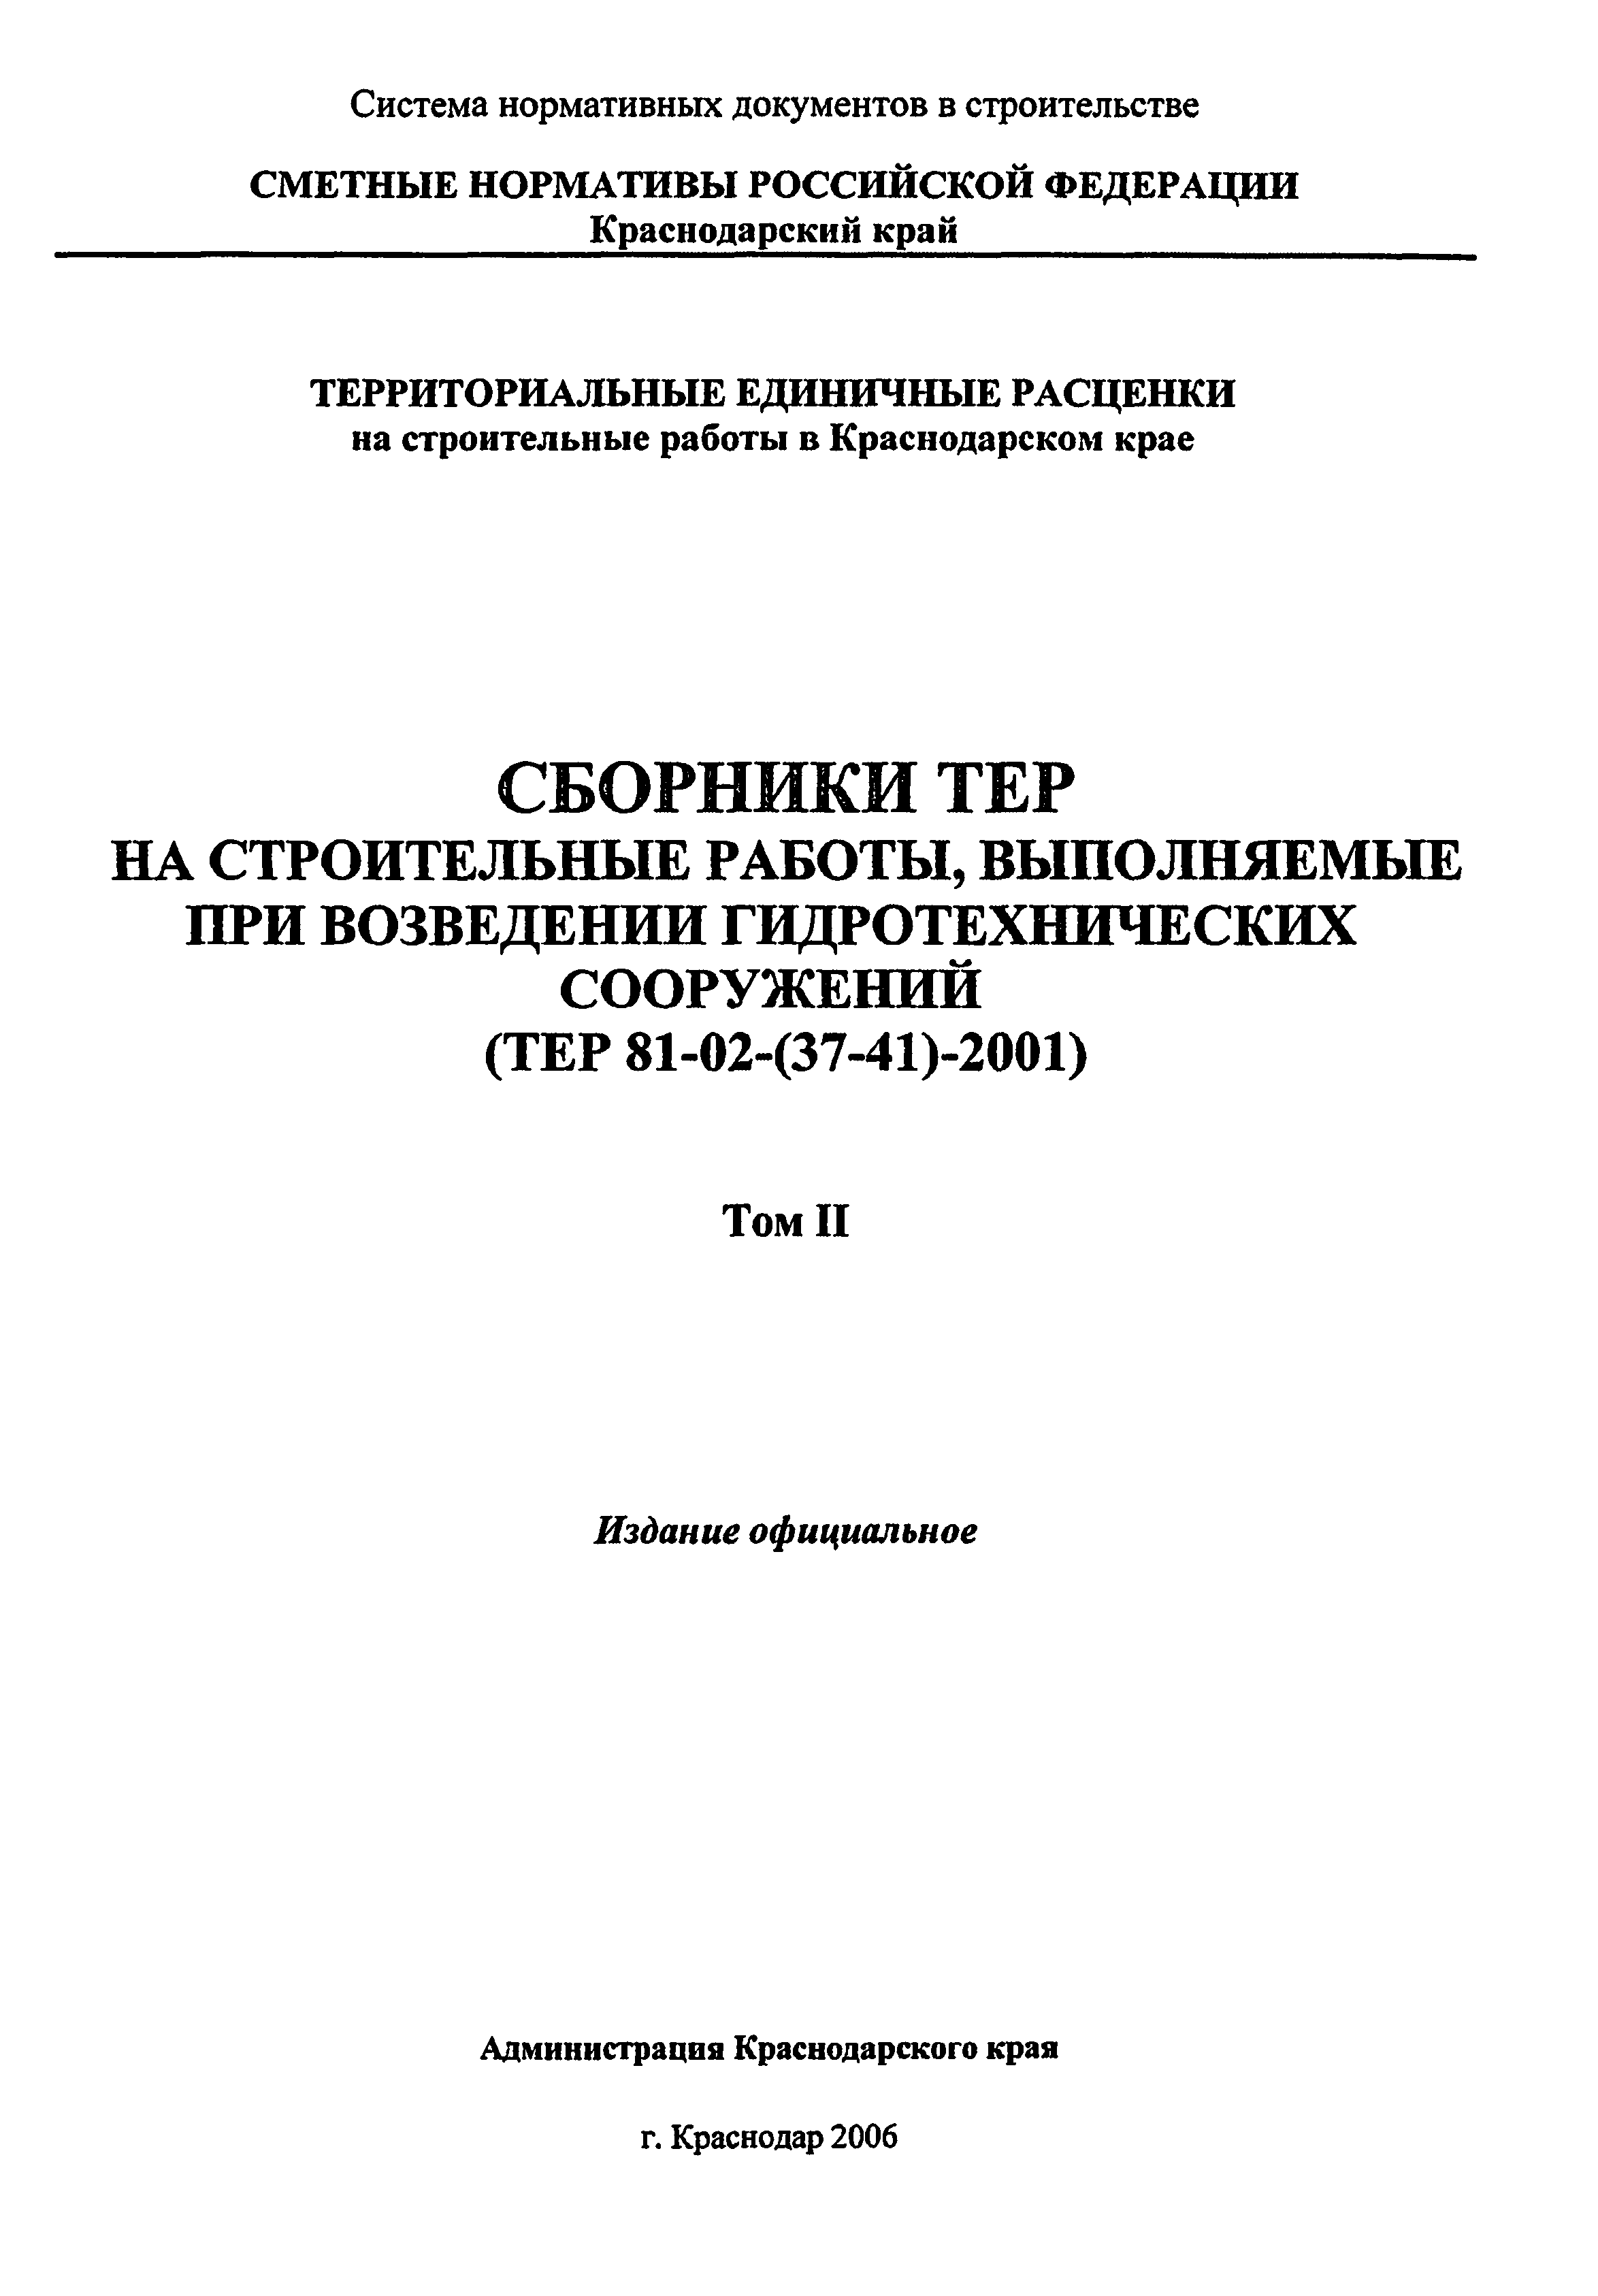 ТЕР Краснодарский край 2001-40